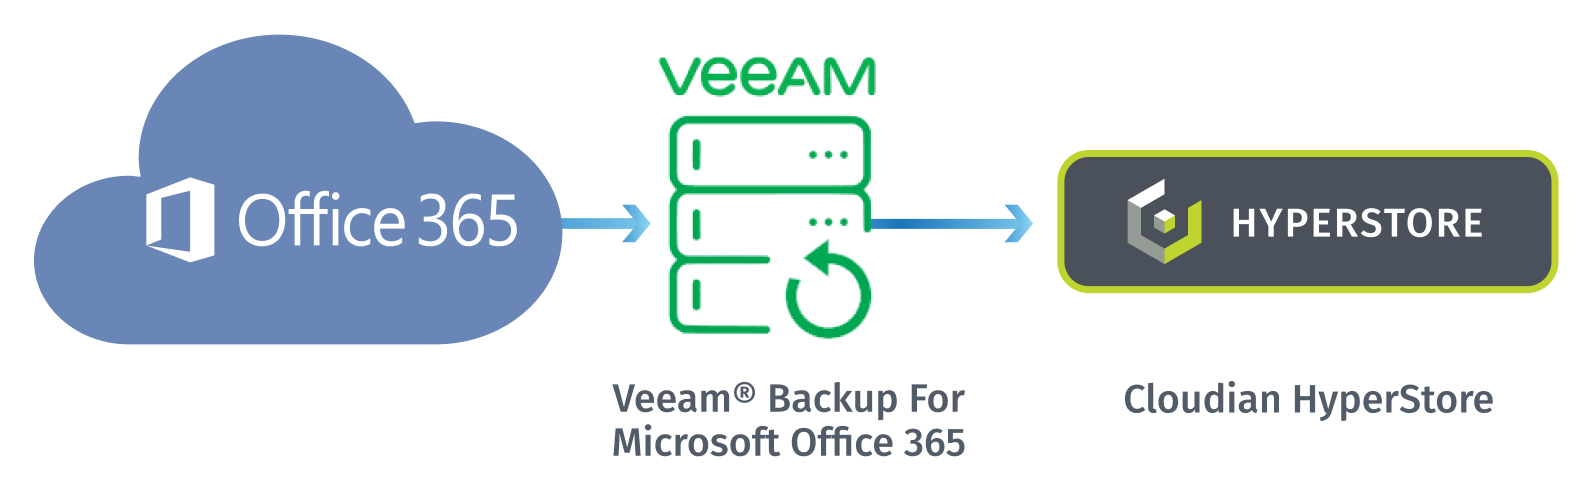 Data-Protection-for-Office-365-Veeam